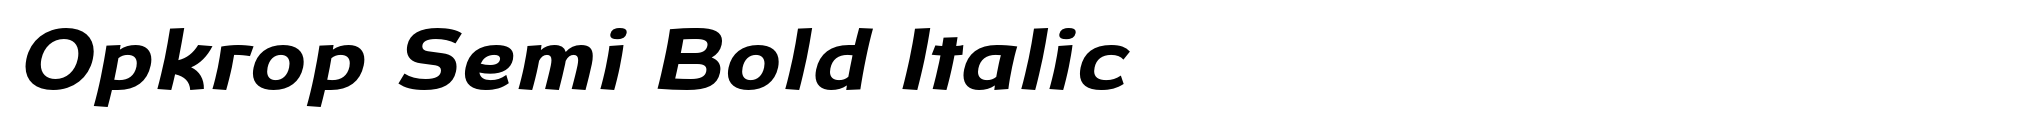 Opkrop Semi Bold Italic image